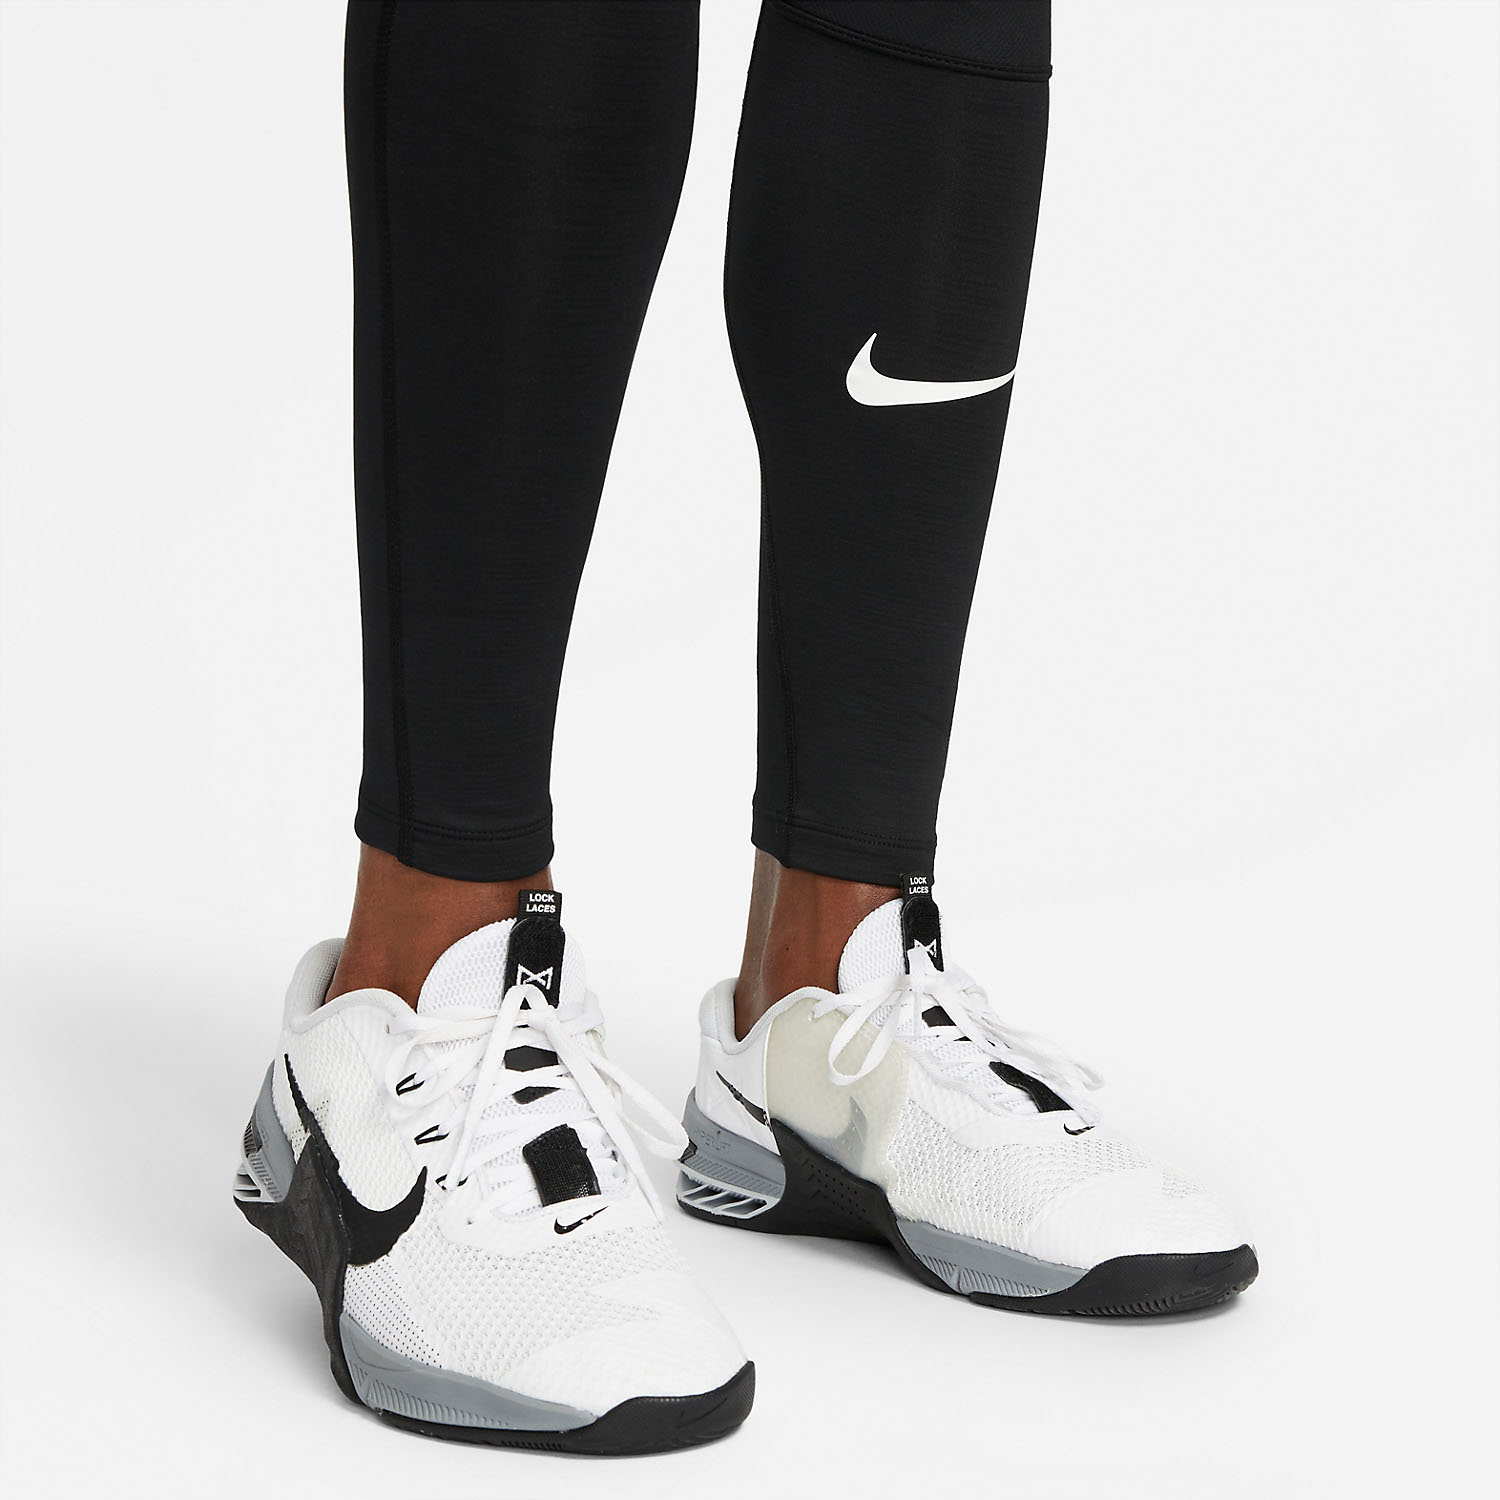 Nike Pro Warm Men's Underwear Long Tights - Black/White